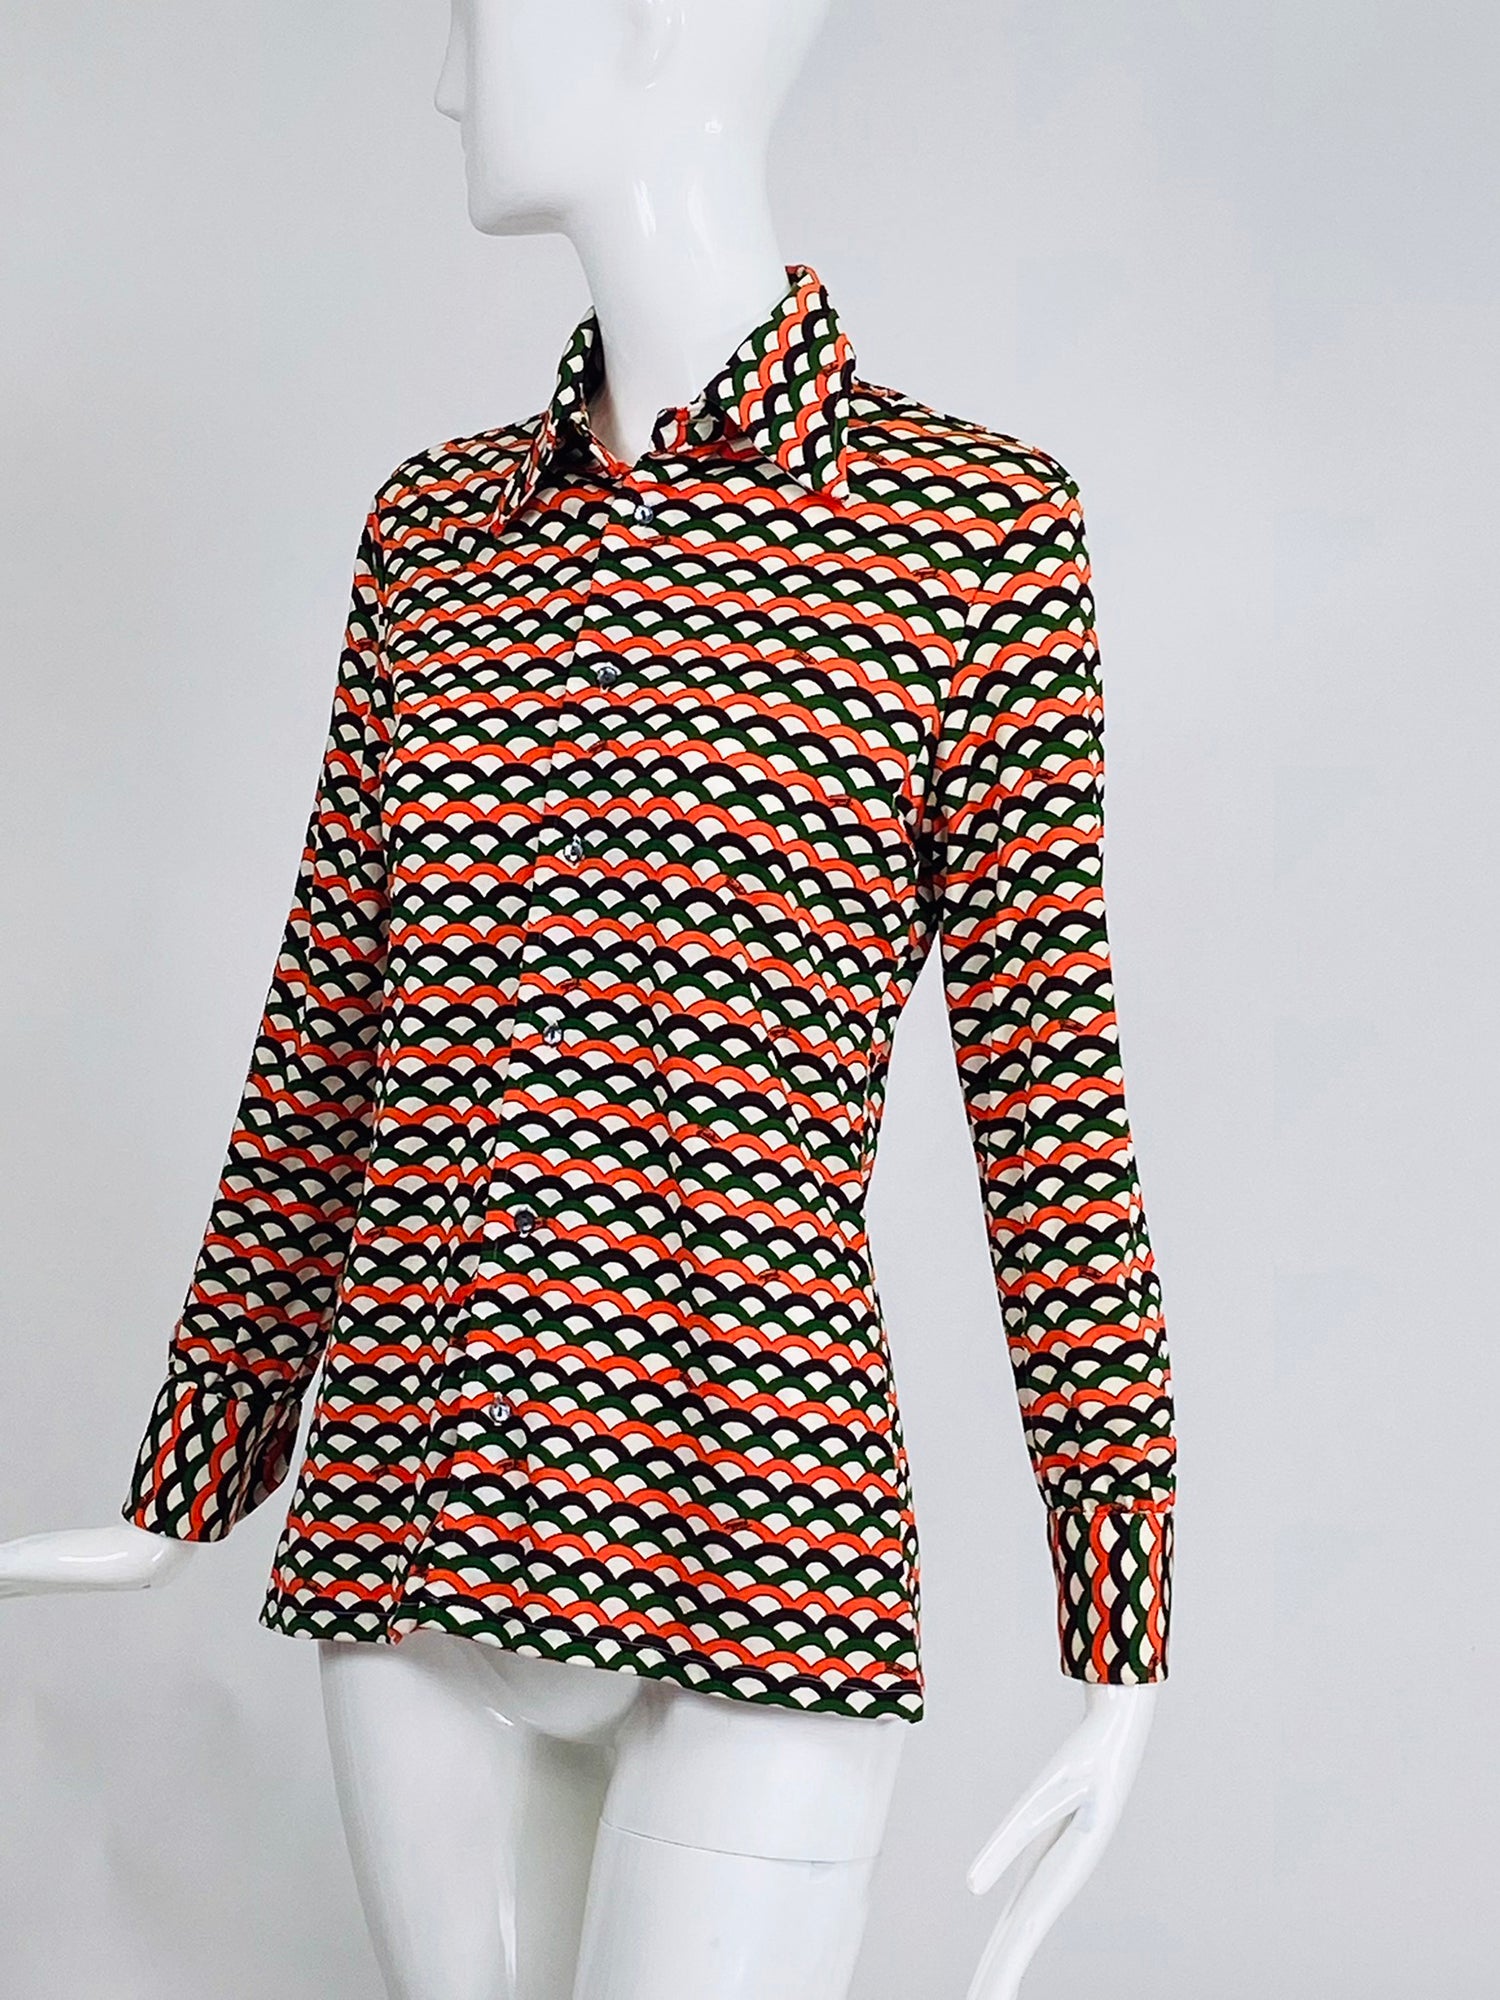 Emilio Pucci silk jersey - 'Geometric Retro Print' - Sew Tessuti Blog